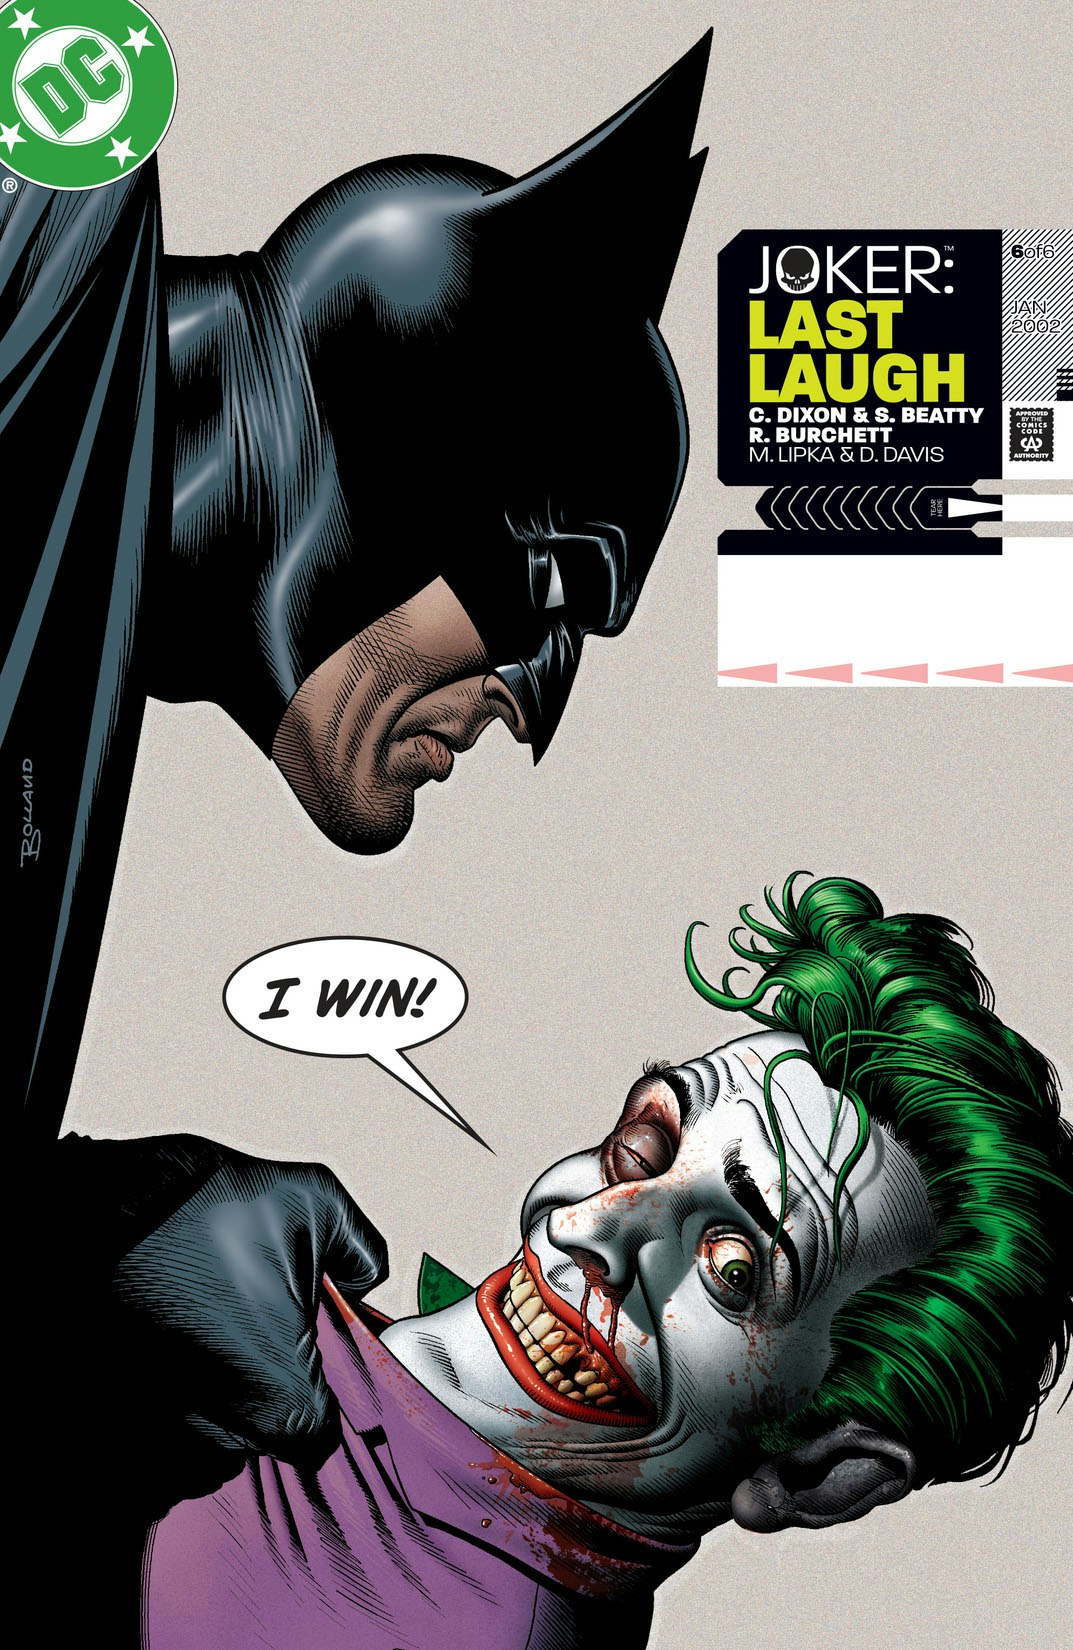 Joker: last laugh